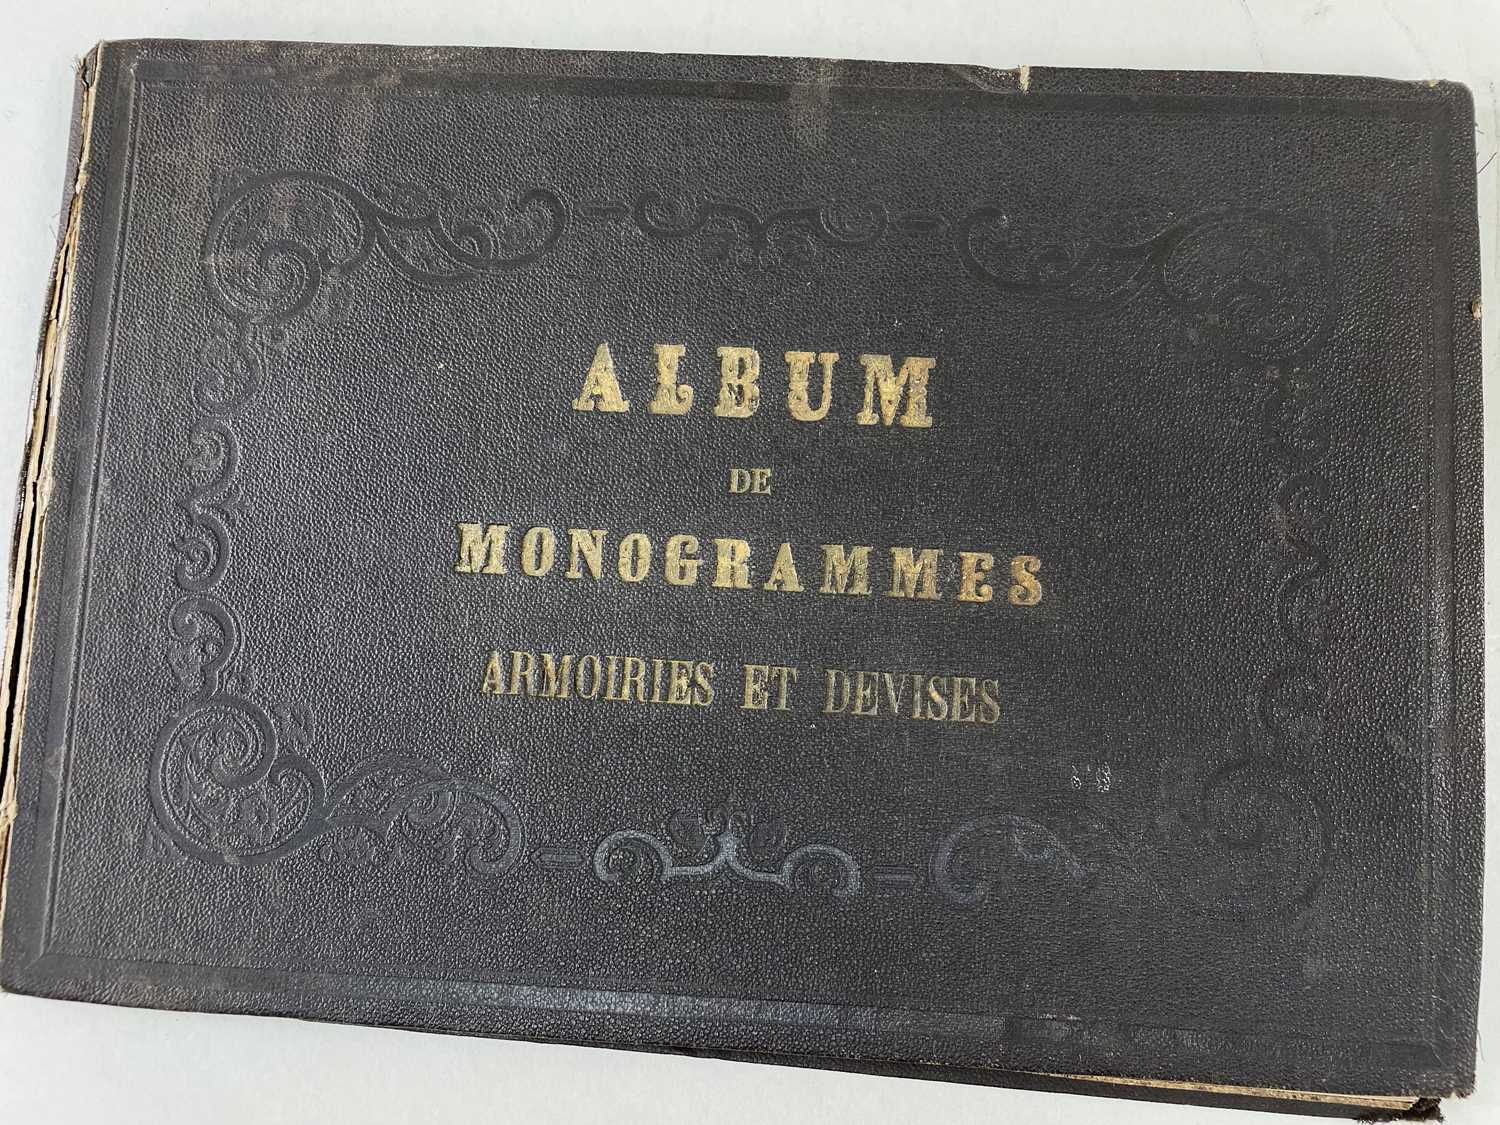 ALBUM OF MONOGRAMS (ARMOIRIES ET DEVISES), circa 1869, collection album containing stuck-down labels - Image 7 of 9